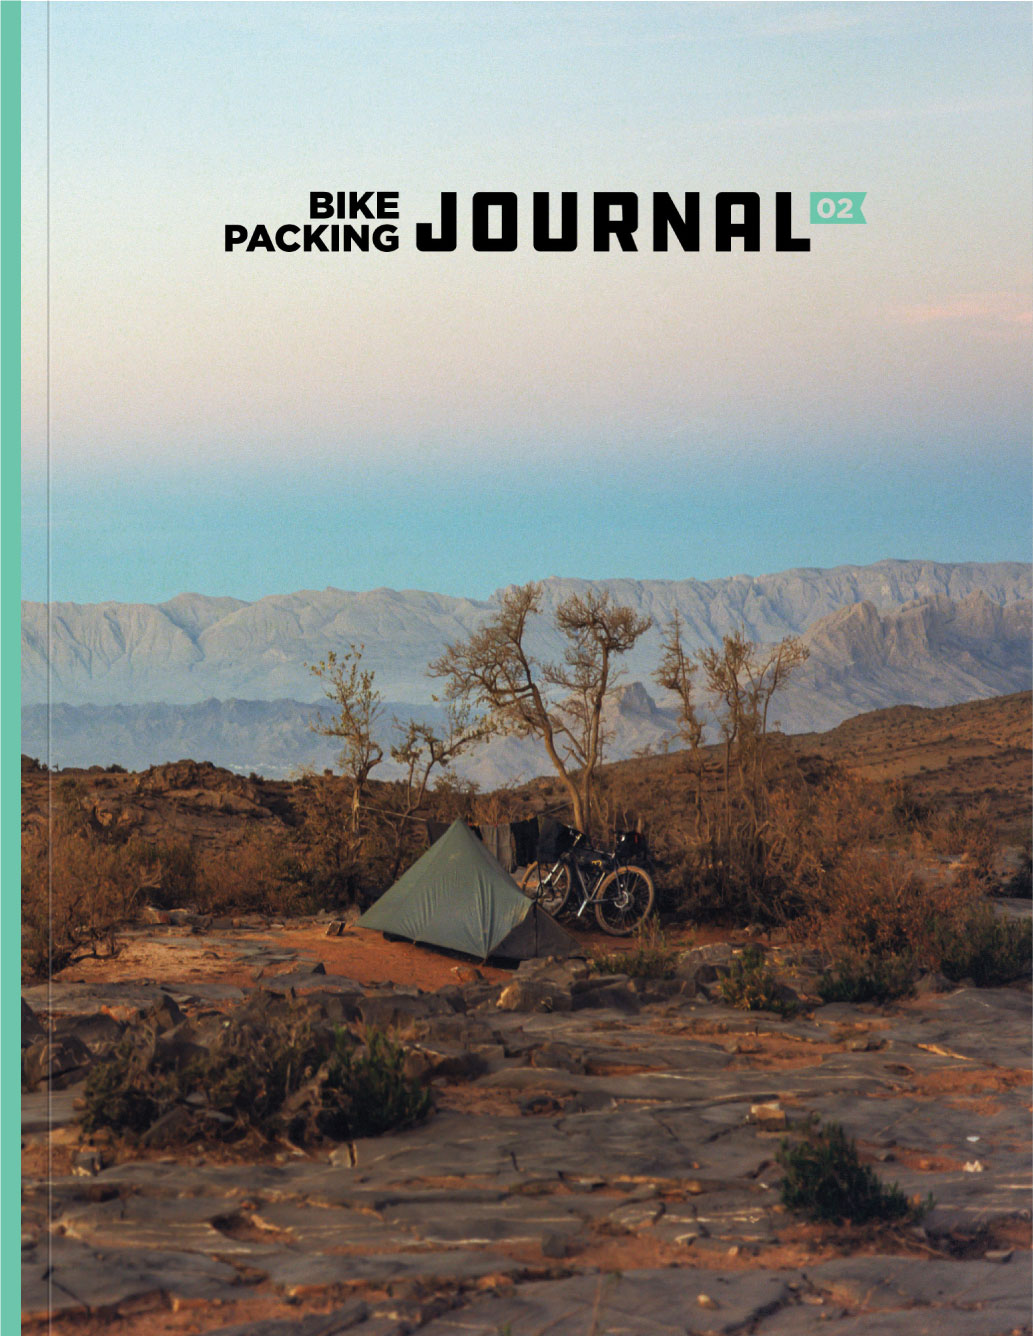 Bikepacking Journal Issue 02